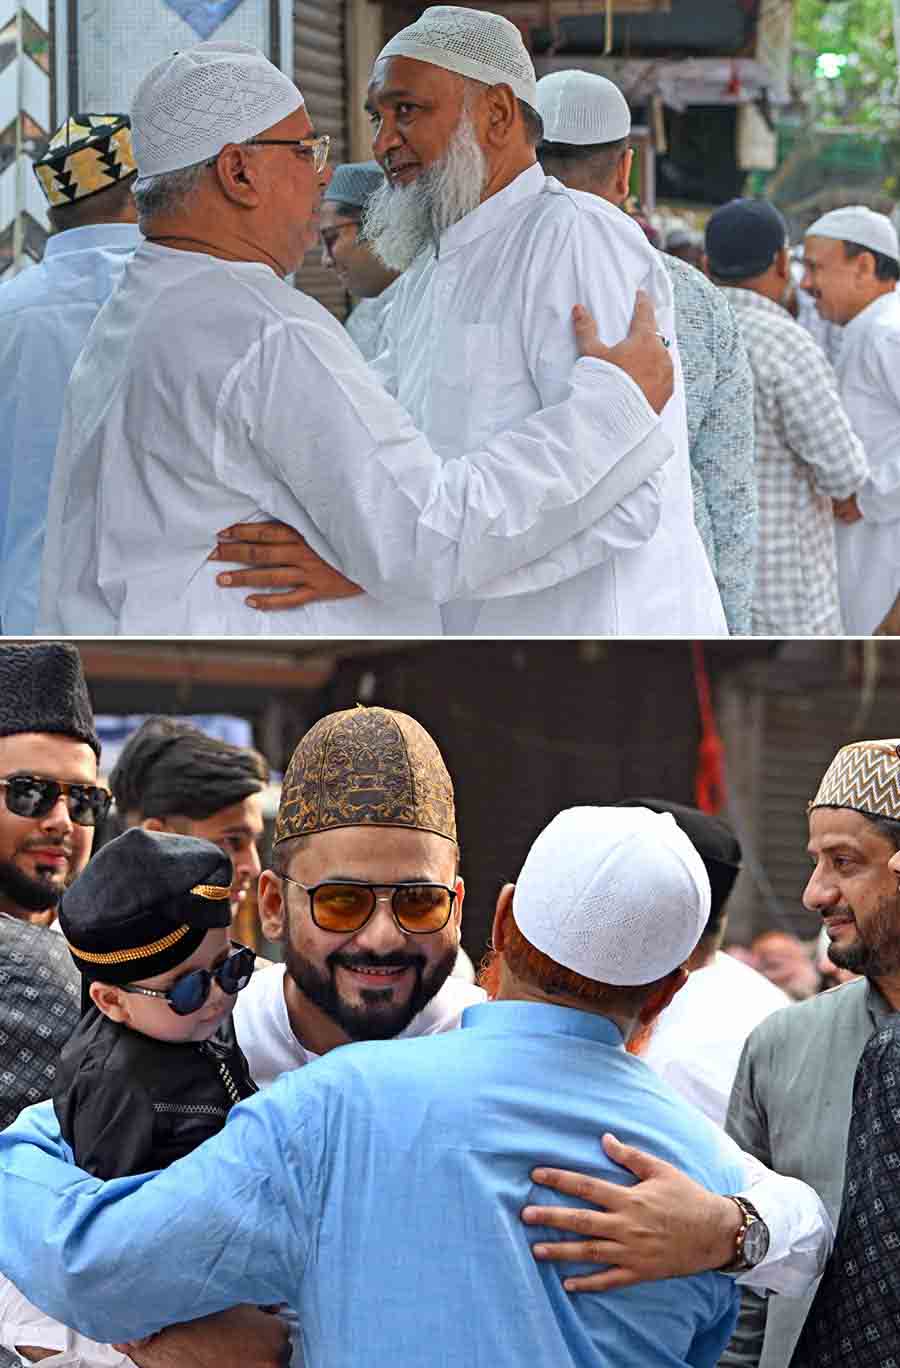 Hugs and greetings marked the brotherhood among the community